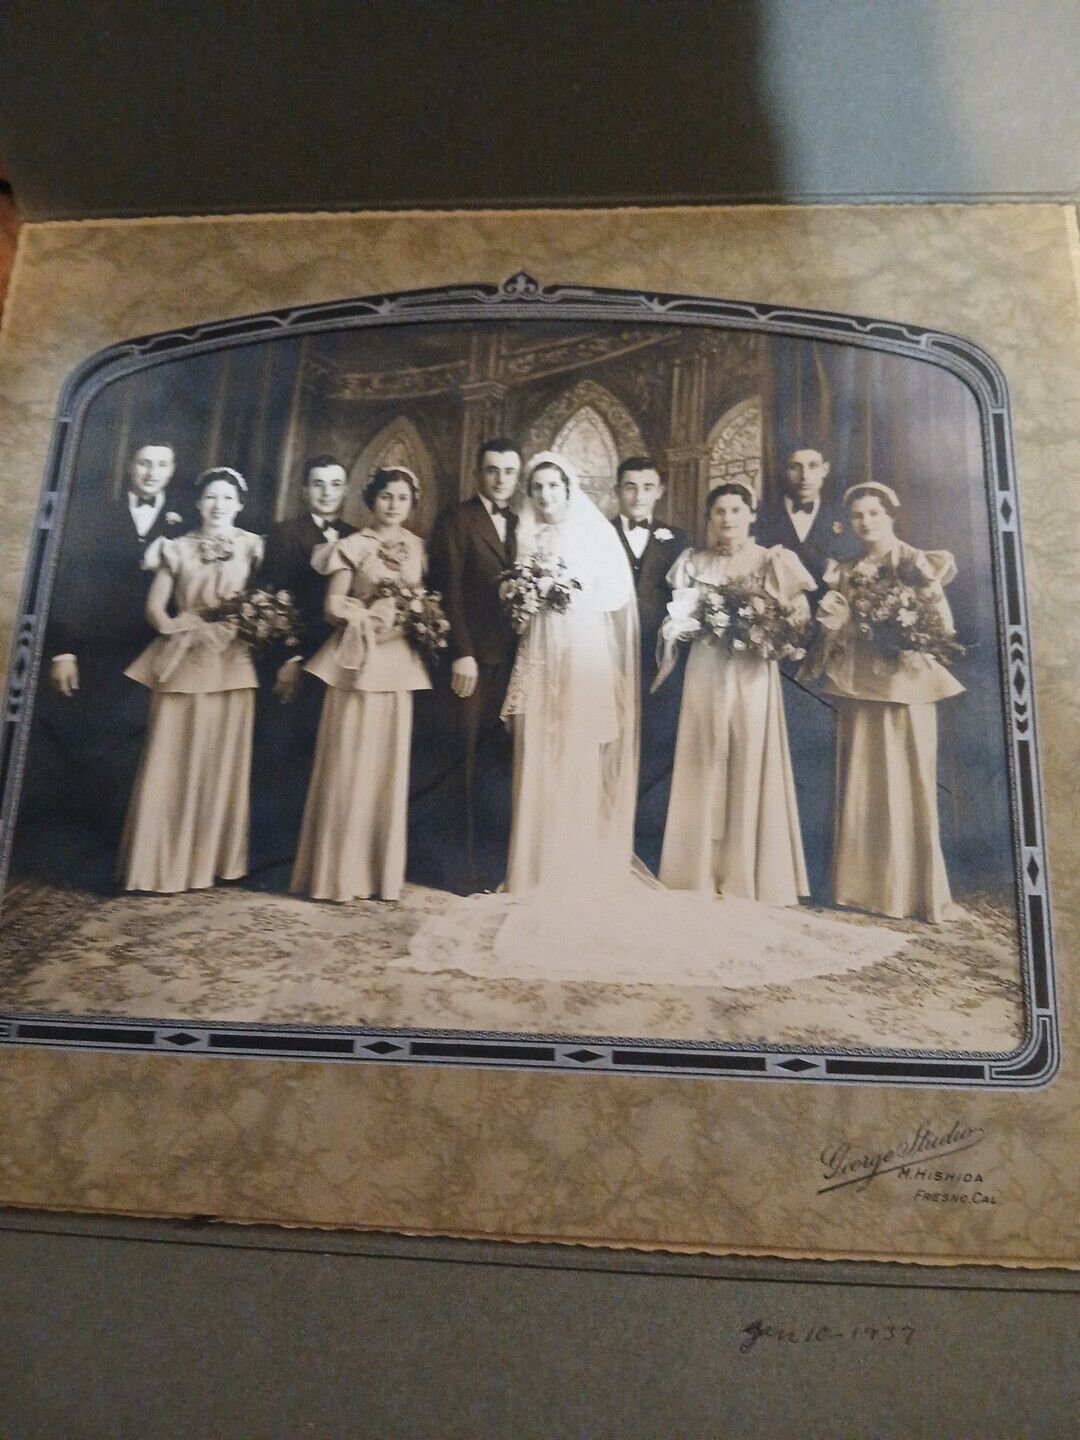 Fresno, CA George Studio M. Hishida Wedding Photo 1937 8